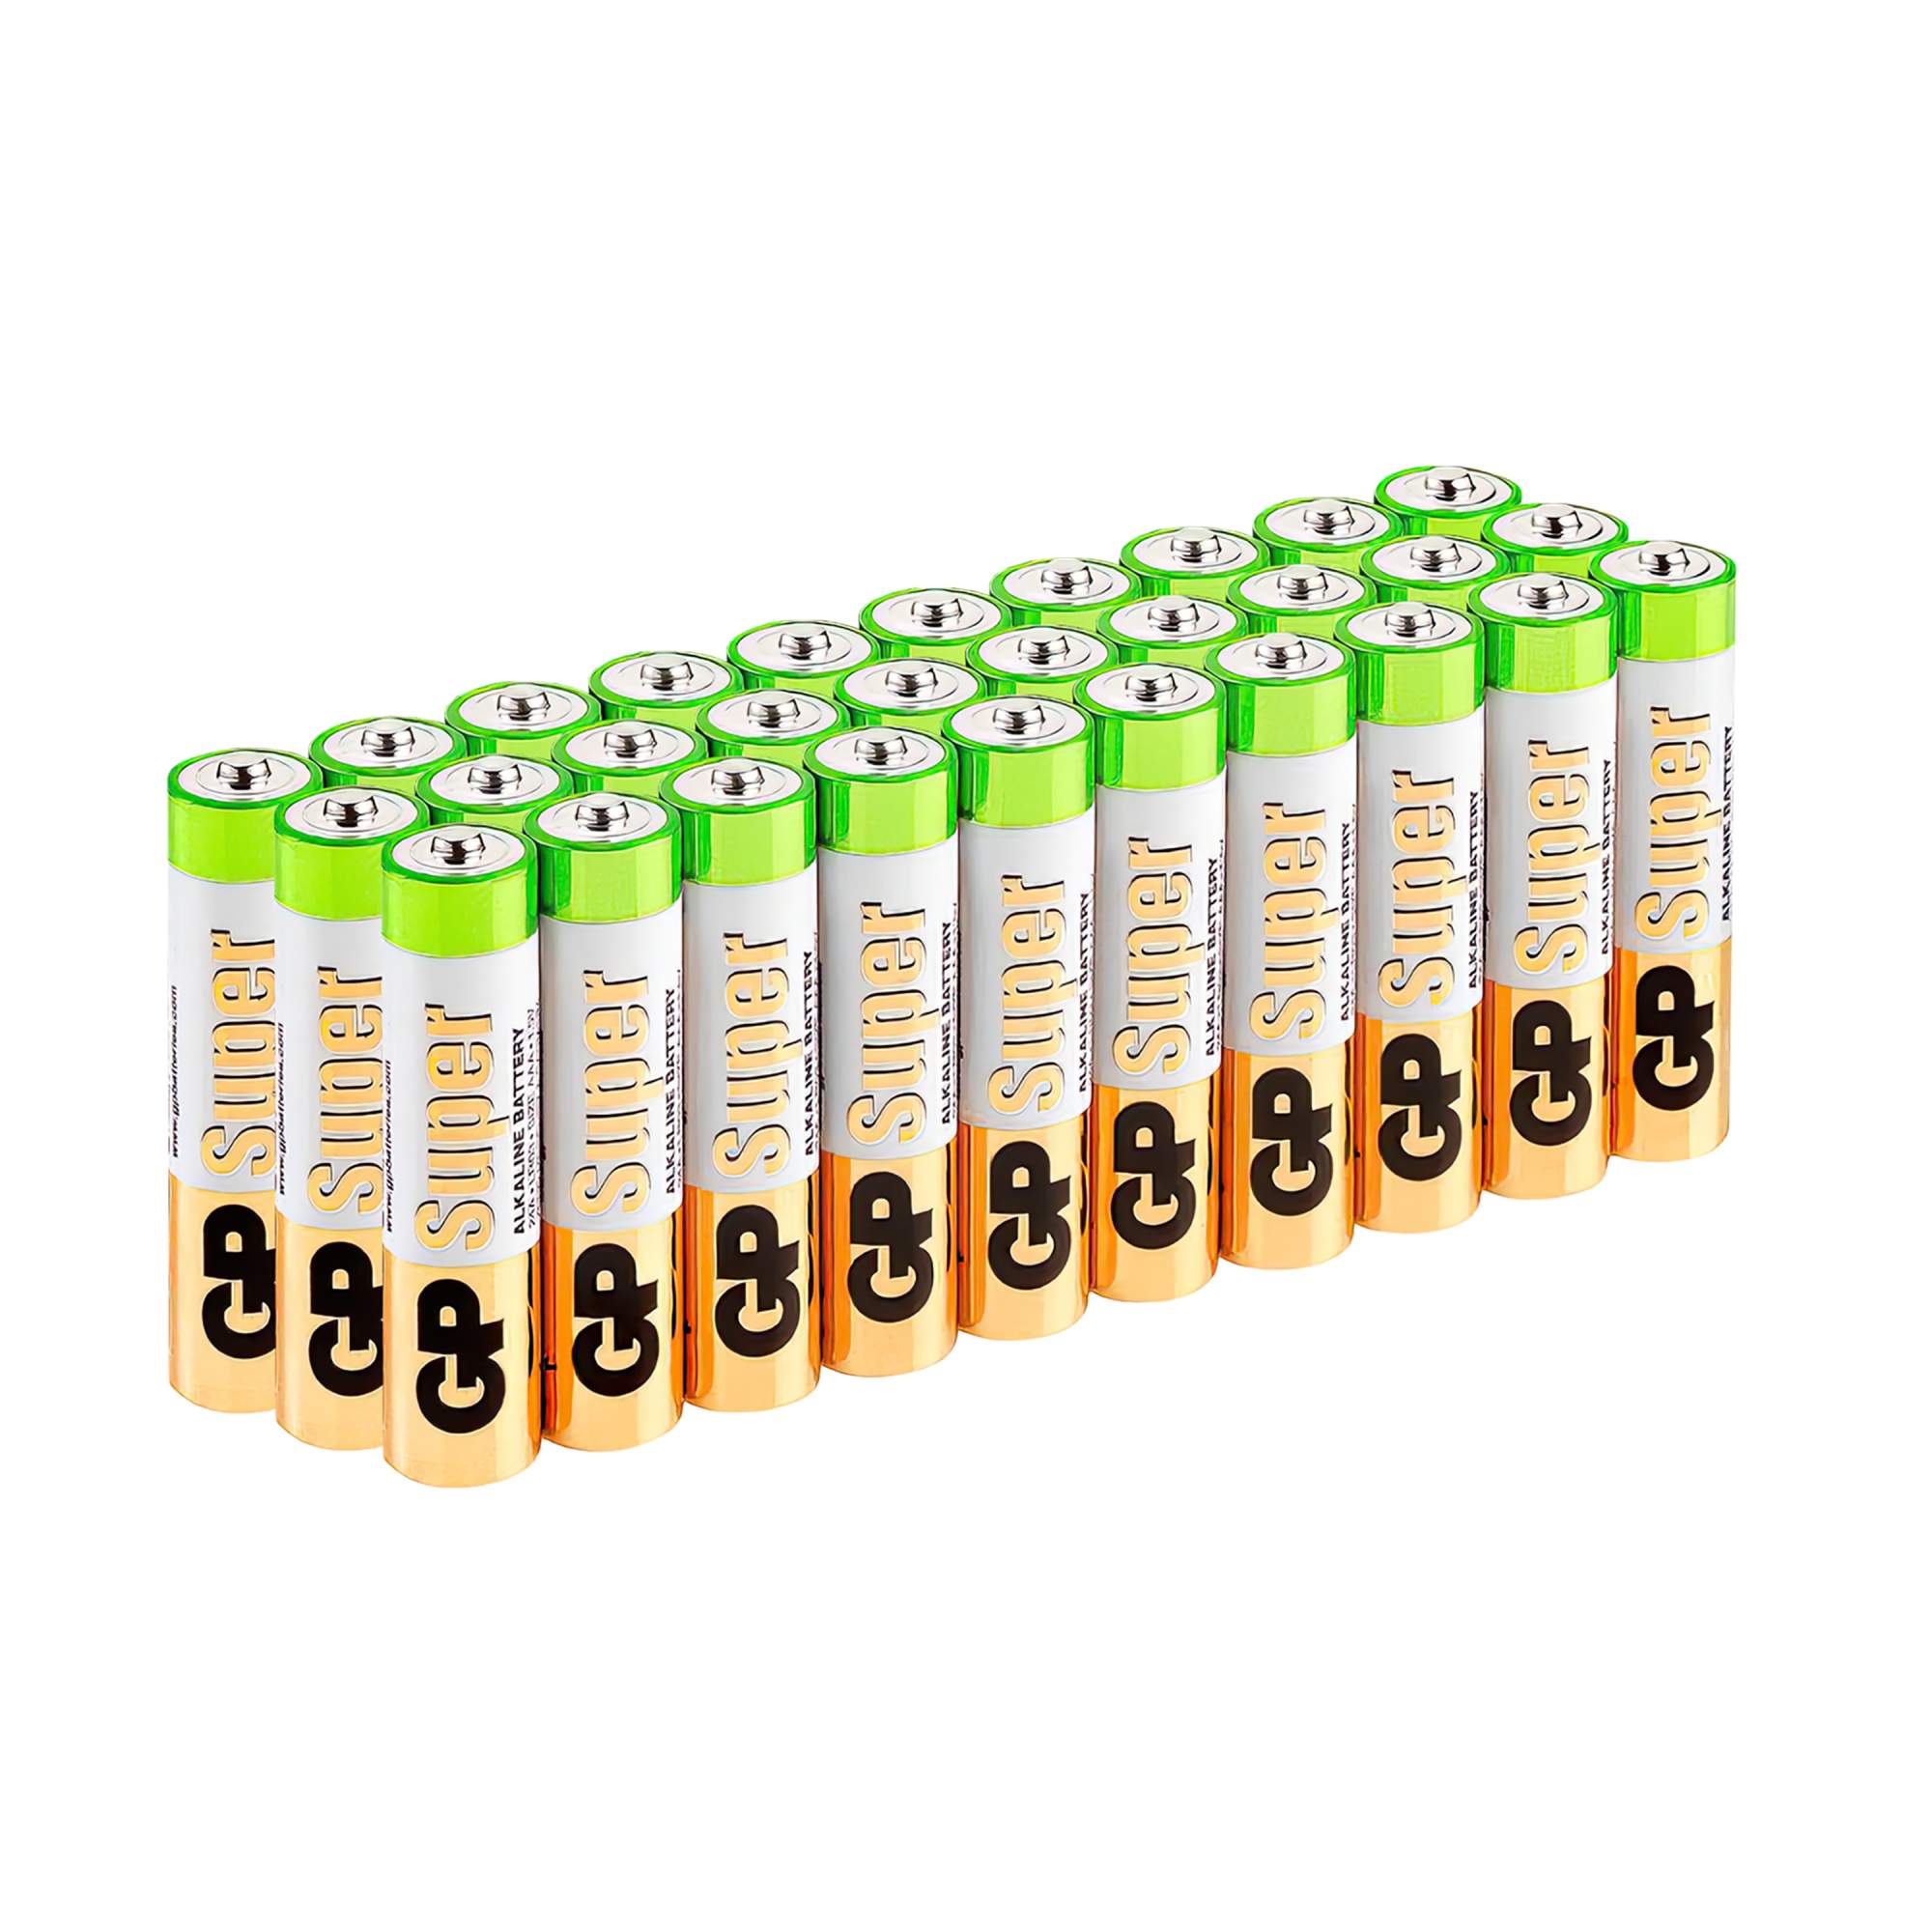 Батарейки GP Batteries Super алкалиновые, ААА, 30 шт - купить в Мегамаркет Москва, цена на Мегамаркет